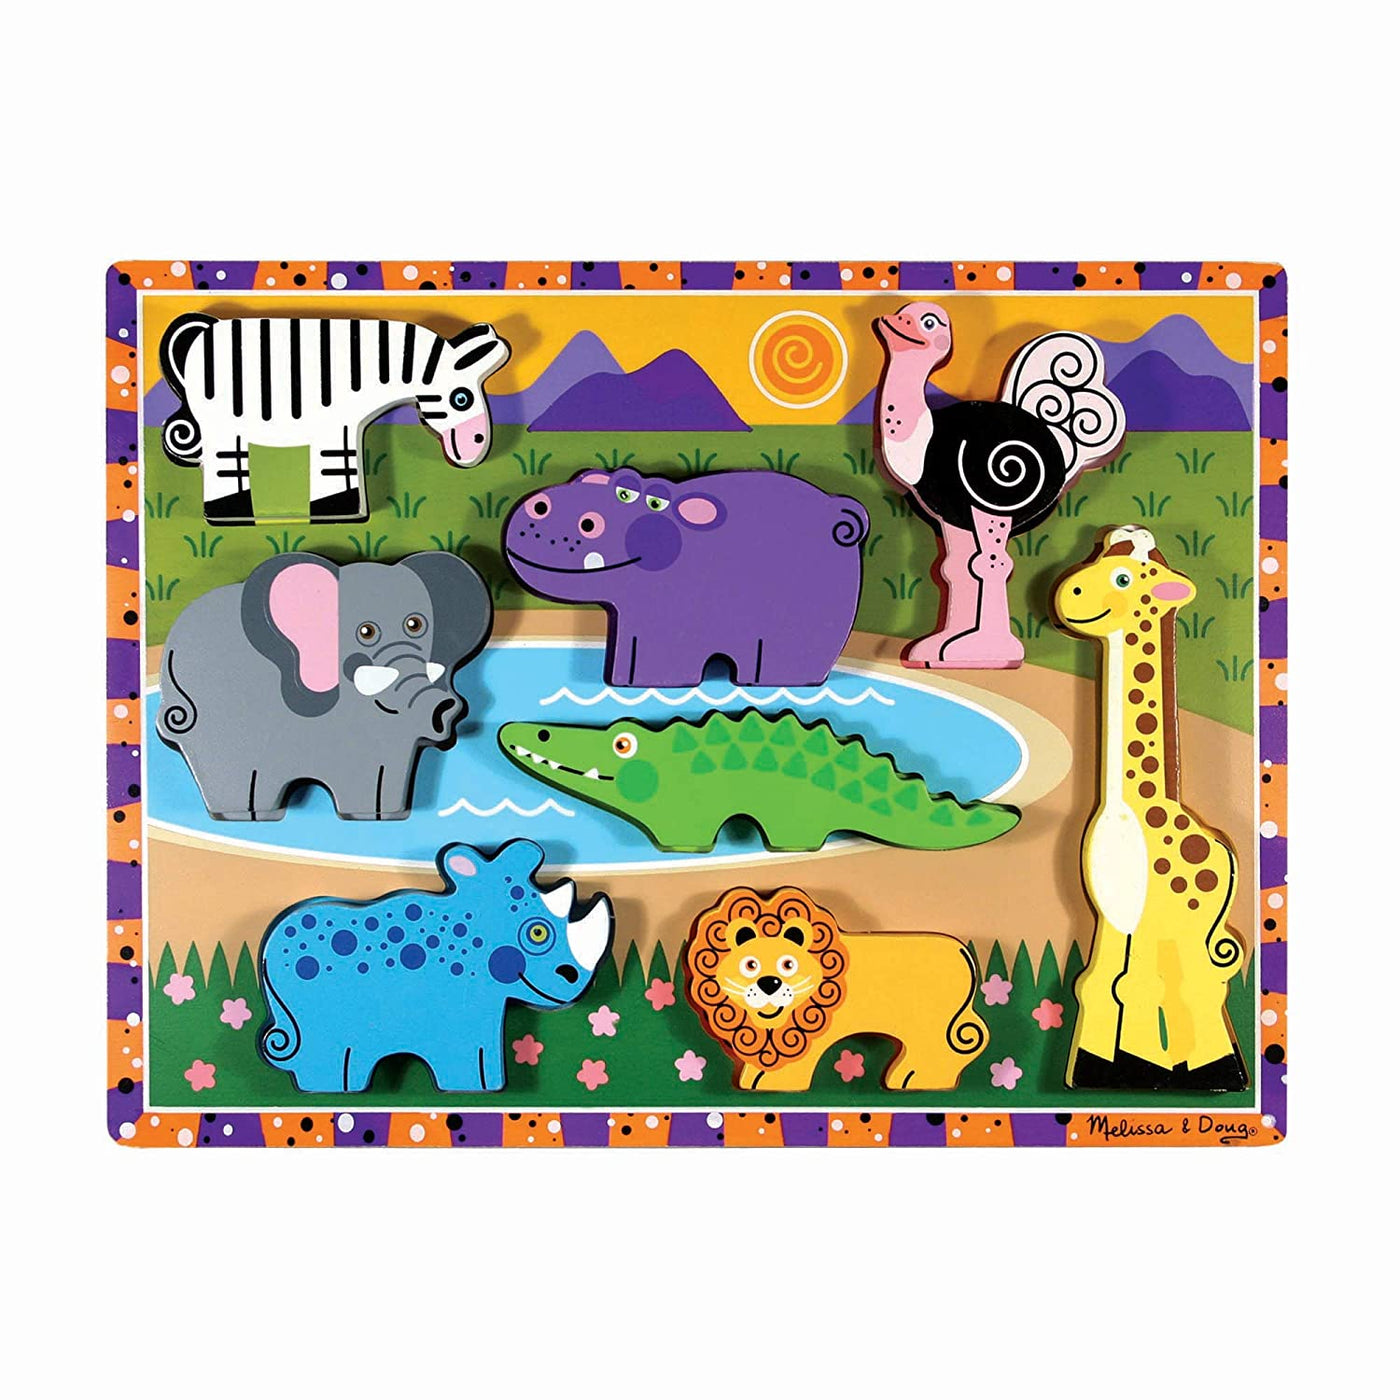 Safari Animal: Chunky Puzzle